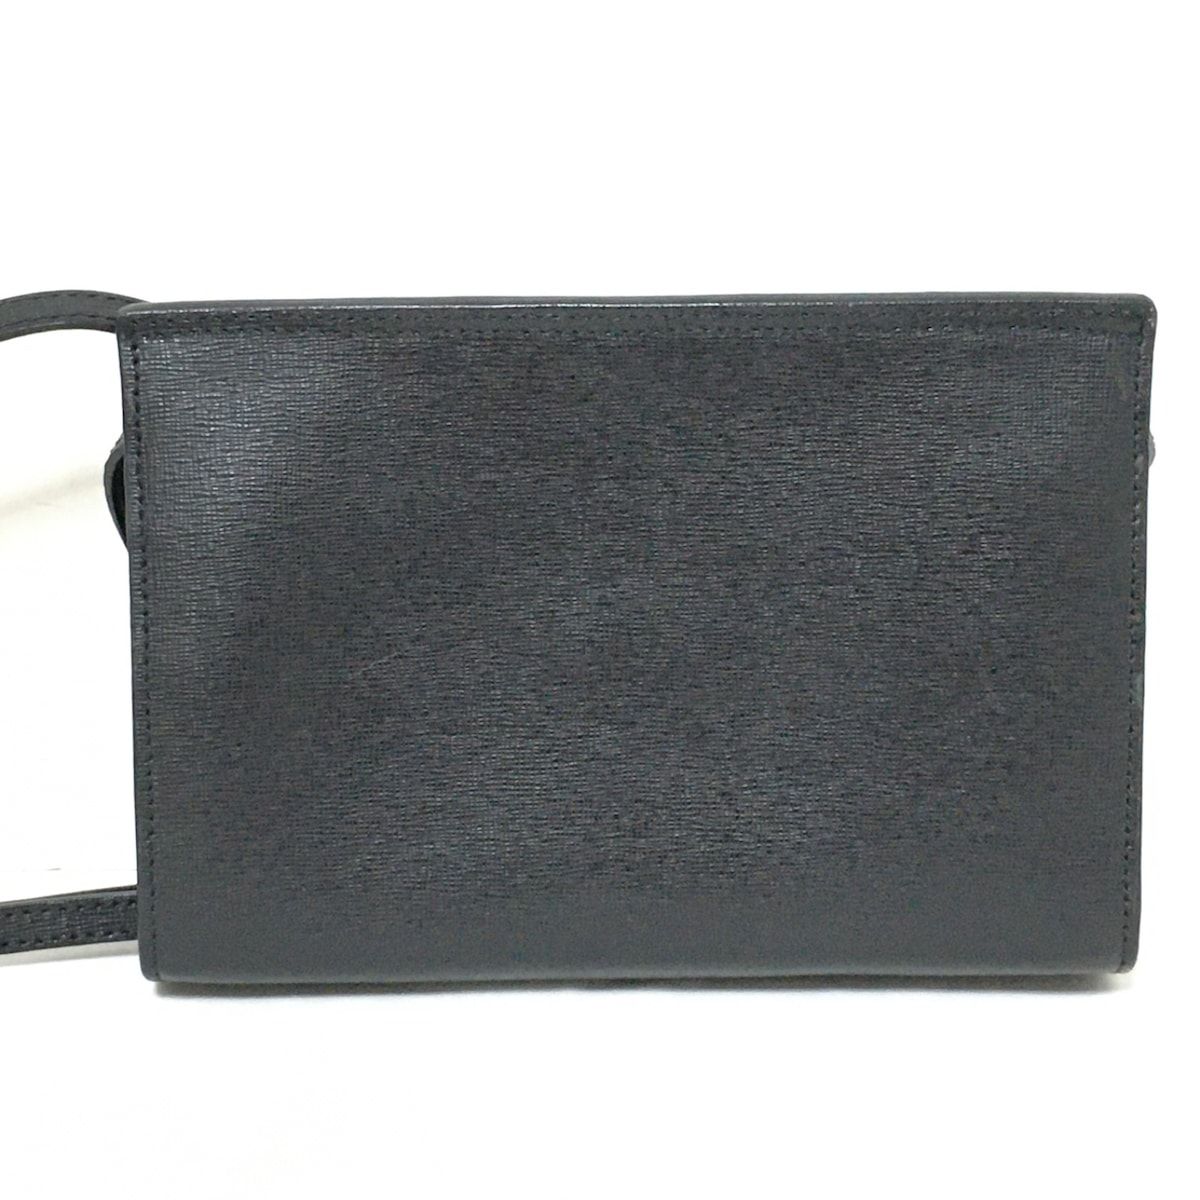 FURLA(フルラ) 財布 - 黒 ショルダーウォレット/ショルダーストラップ着脱可 レザー